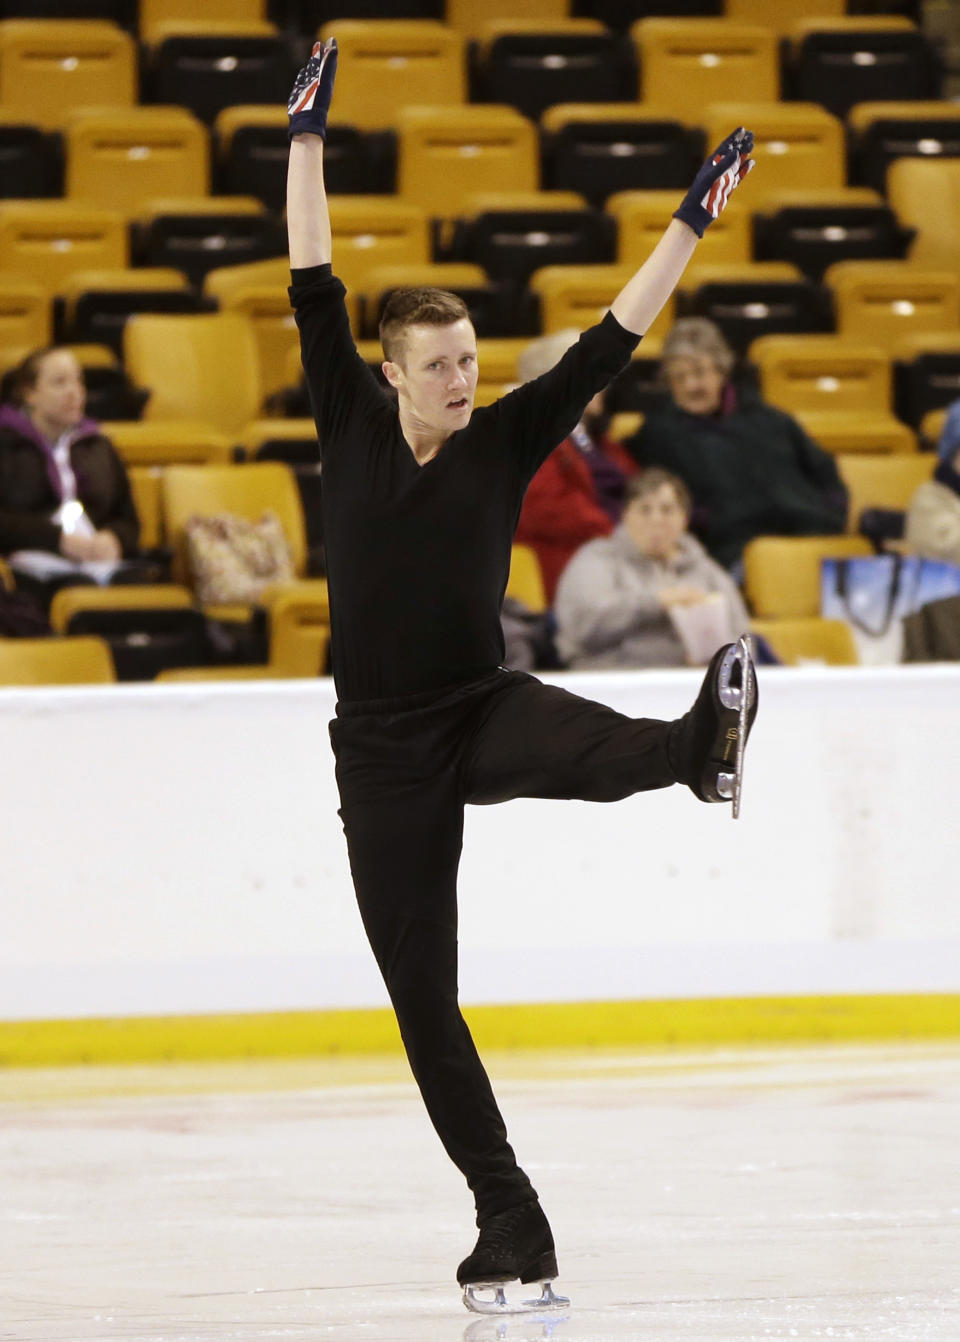 Jeremy Abbott skates during practice at the U.S. Figure Skating Championships Wednesday, Jan. 8, 2014 in Boston. (AP Photo/Steven Senne)